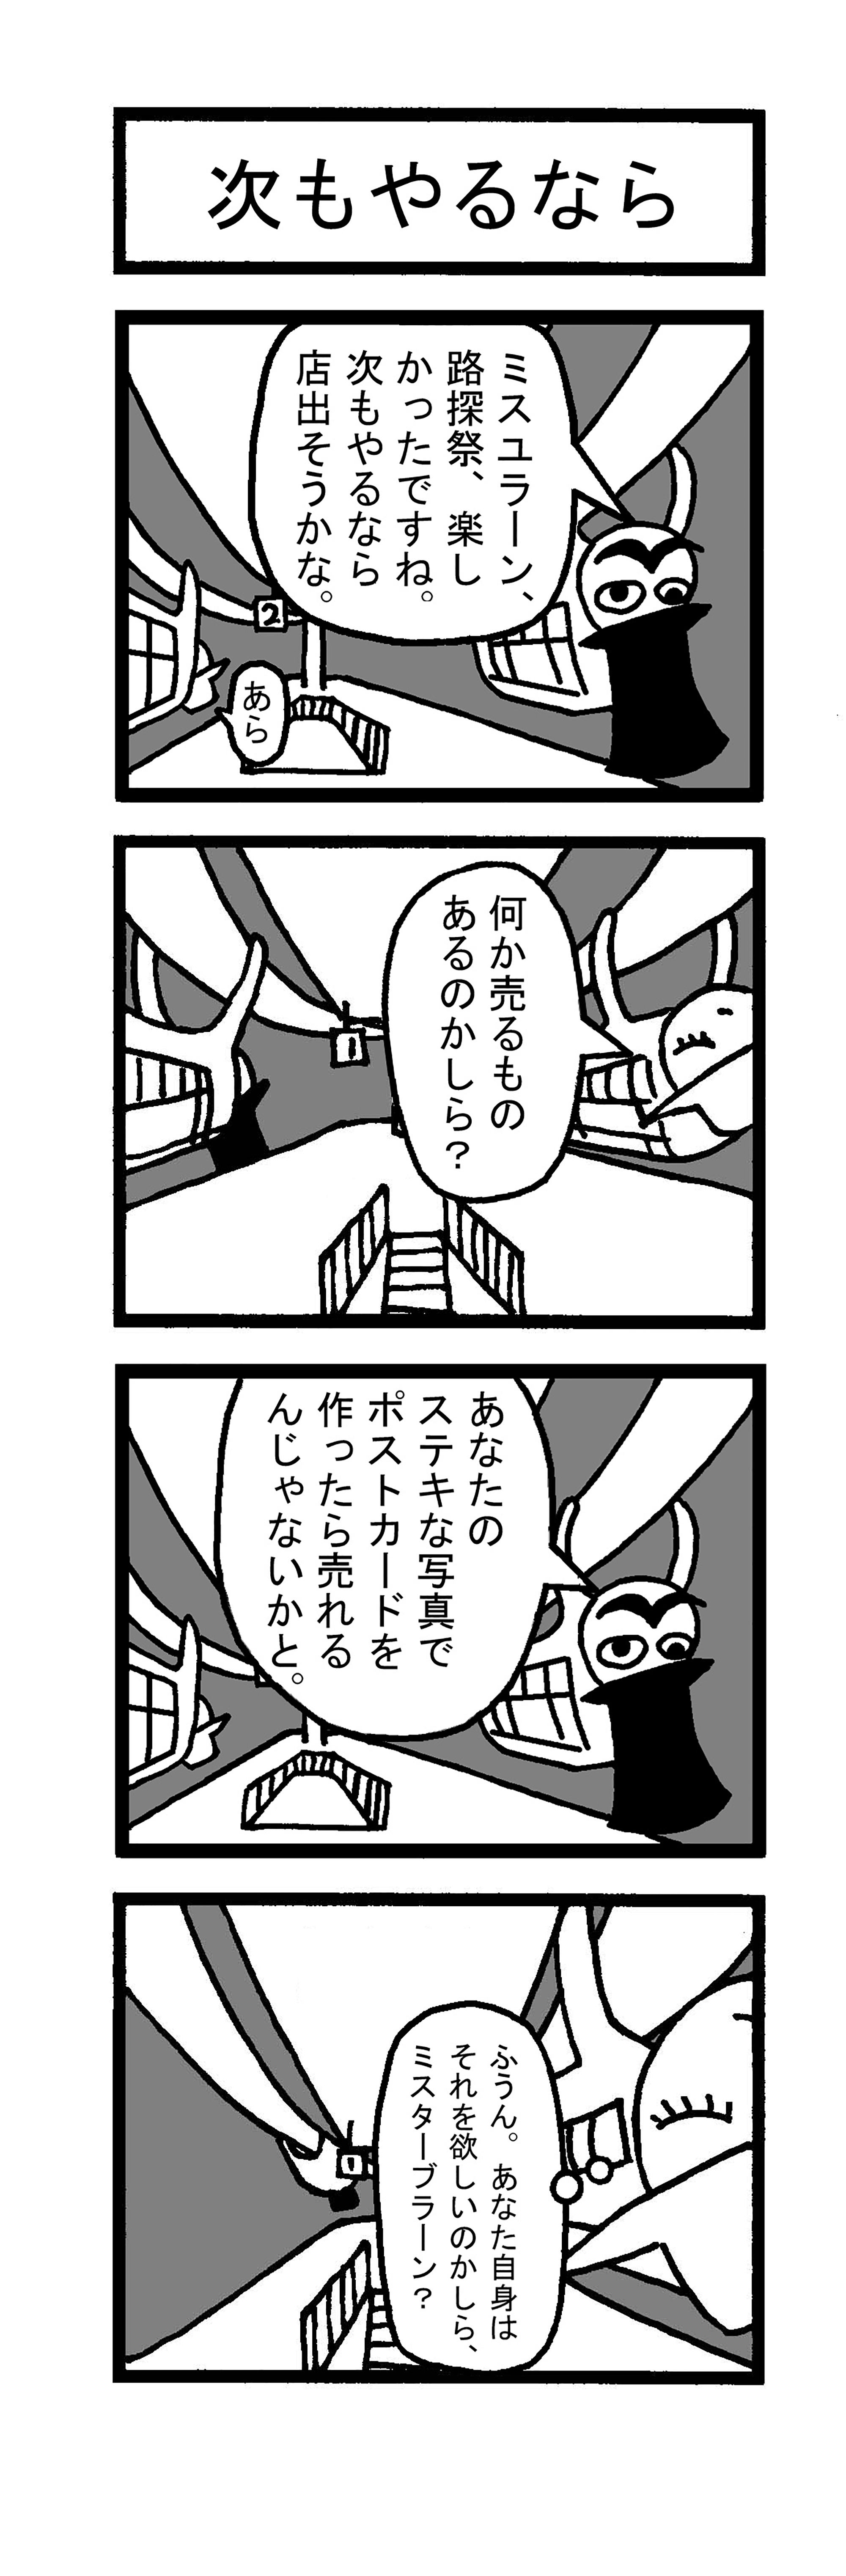 manga_26.jpg